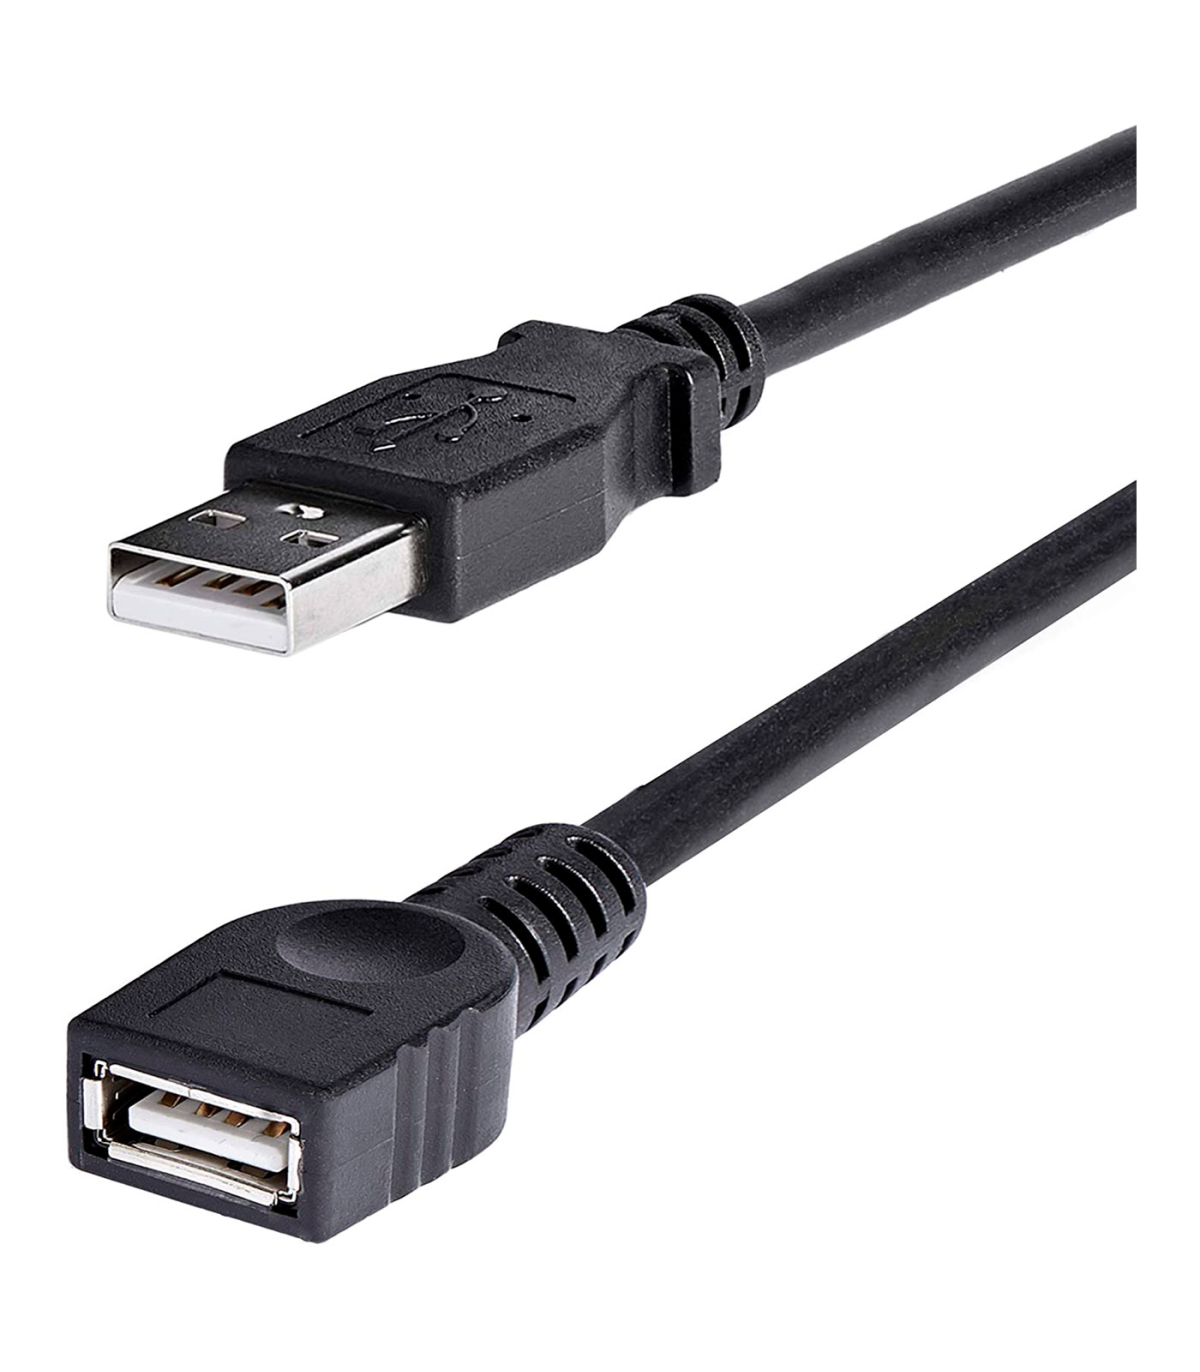 Cable alargador USB, hembra a macho, extensión, alta velocidad, impresora,  ratón, teclado, pendrive, mando de consola, disco ext